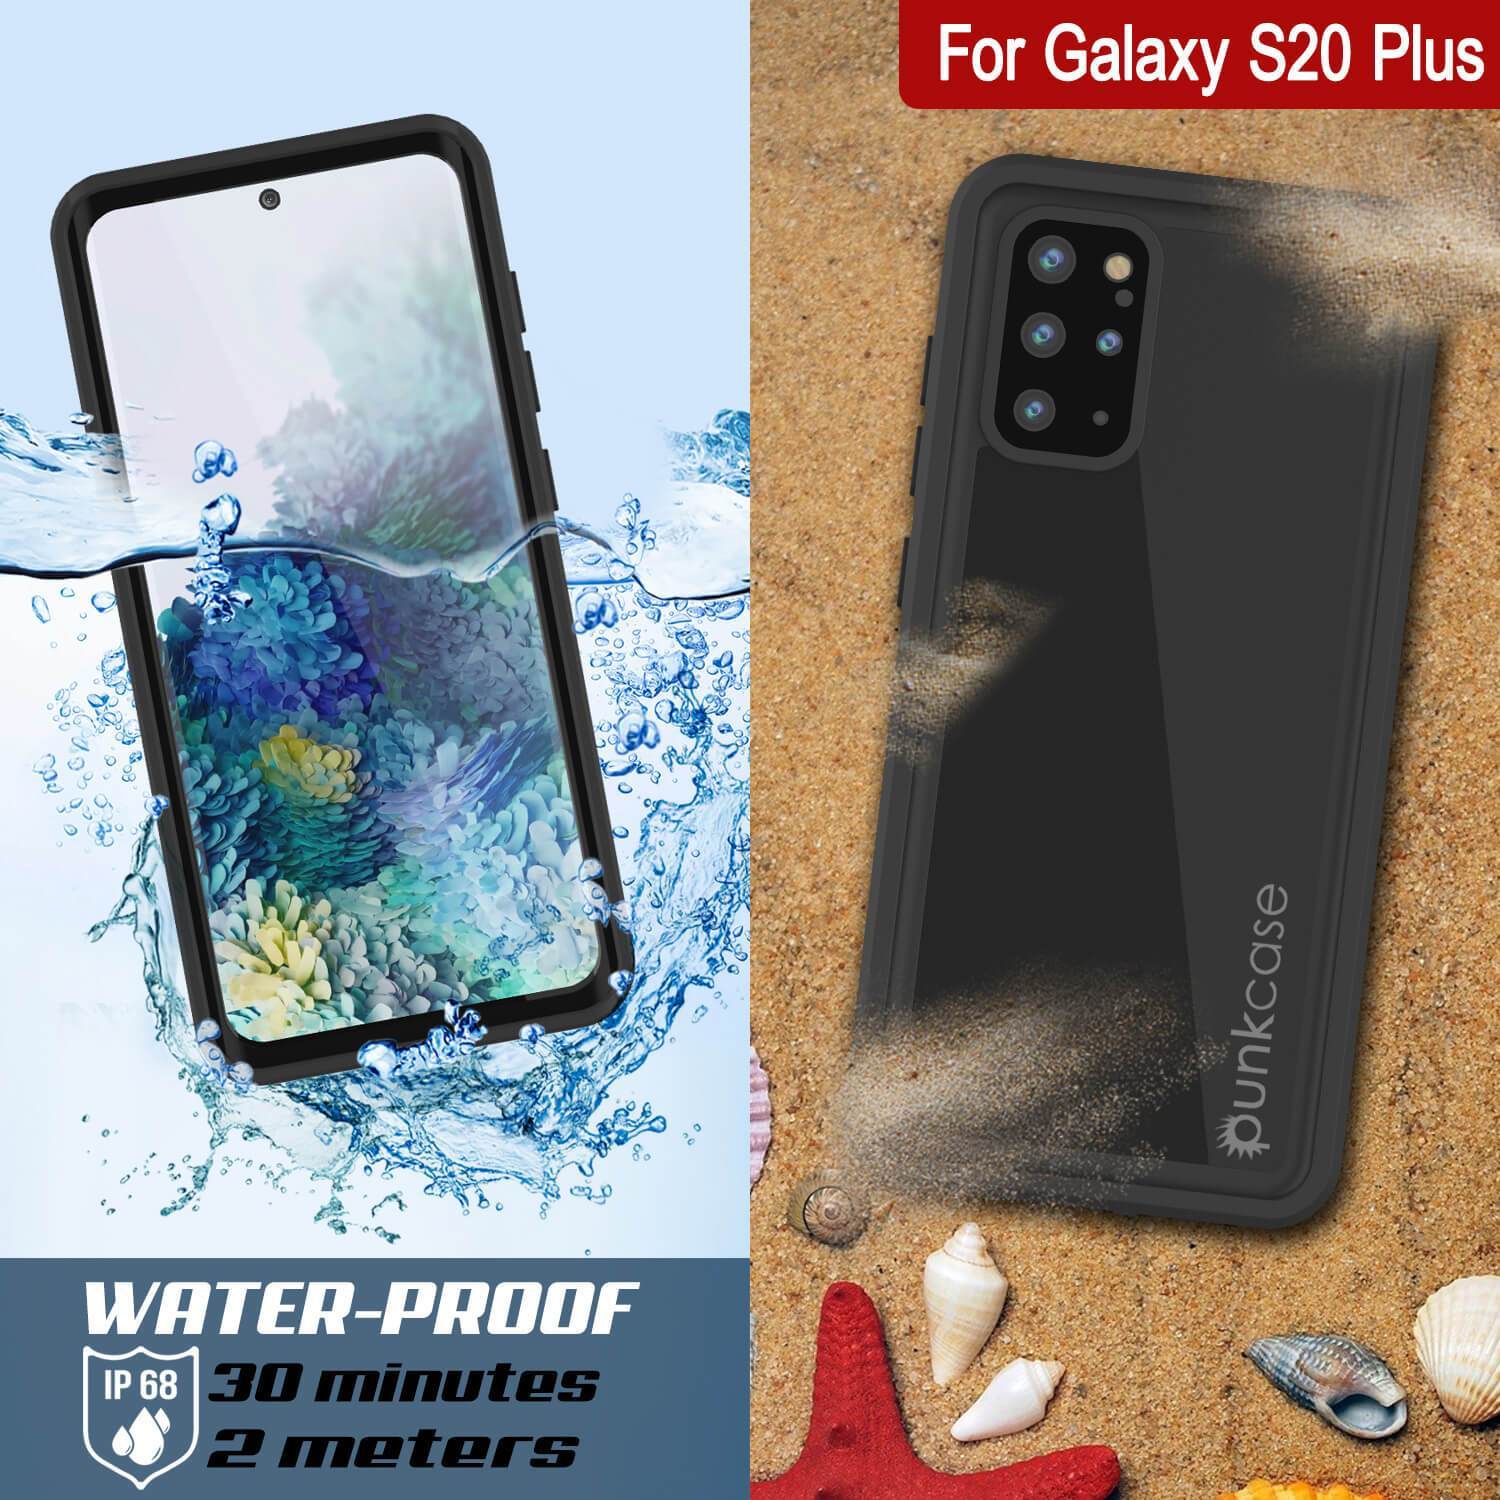 Galaxy S20+ Plus Waterproof Case PunkCase StudStar Teal Thin 6.6ft Underwater IP68 Shock/Snow Proof